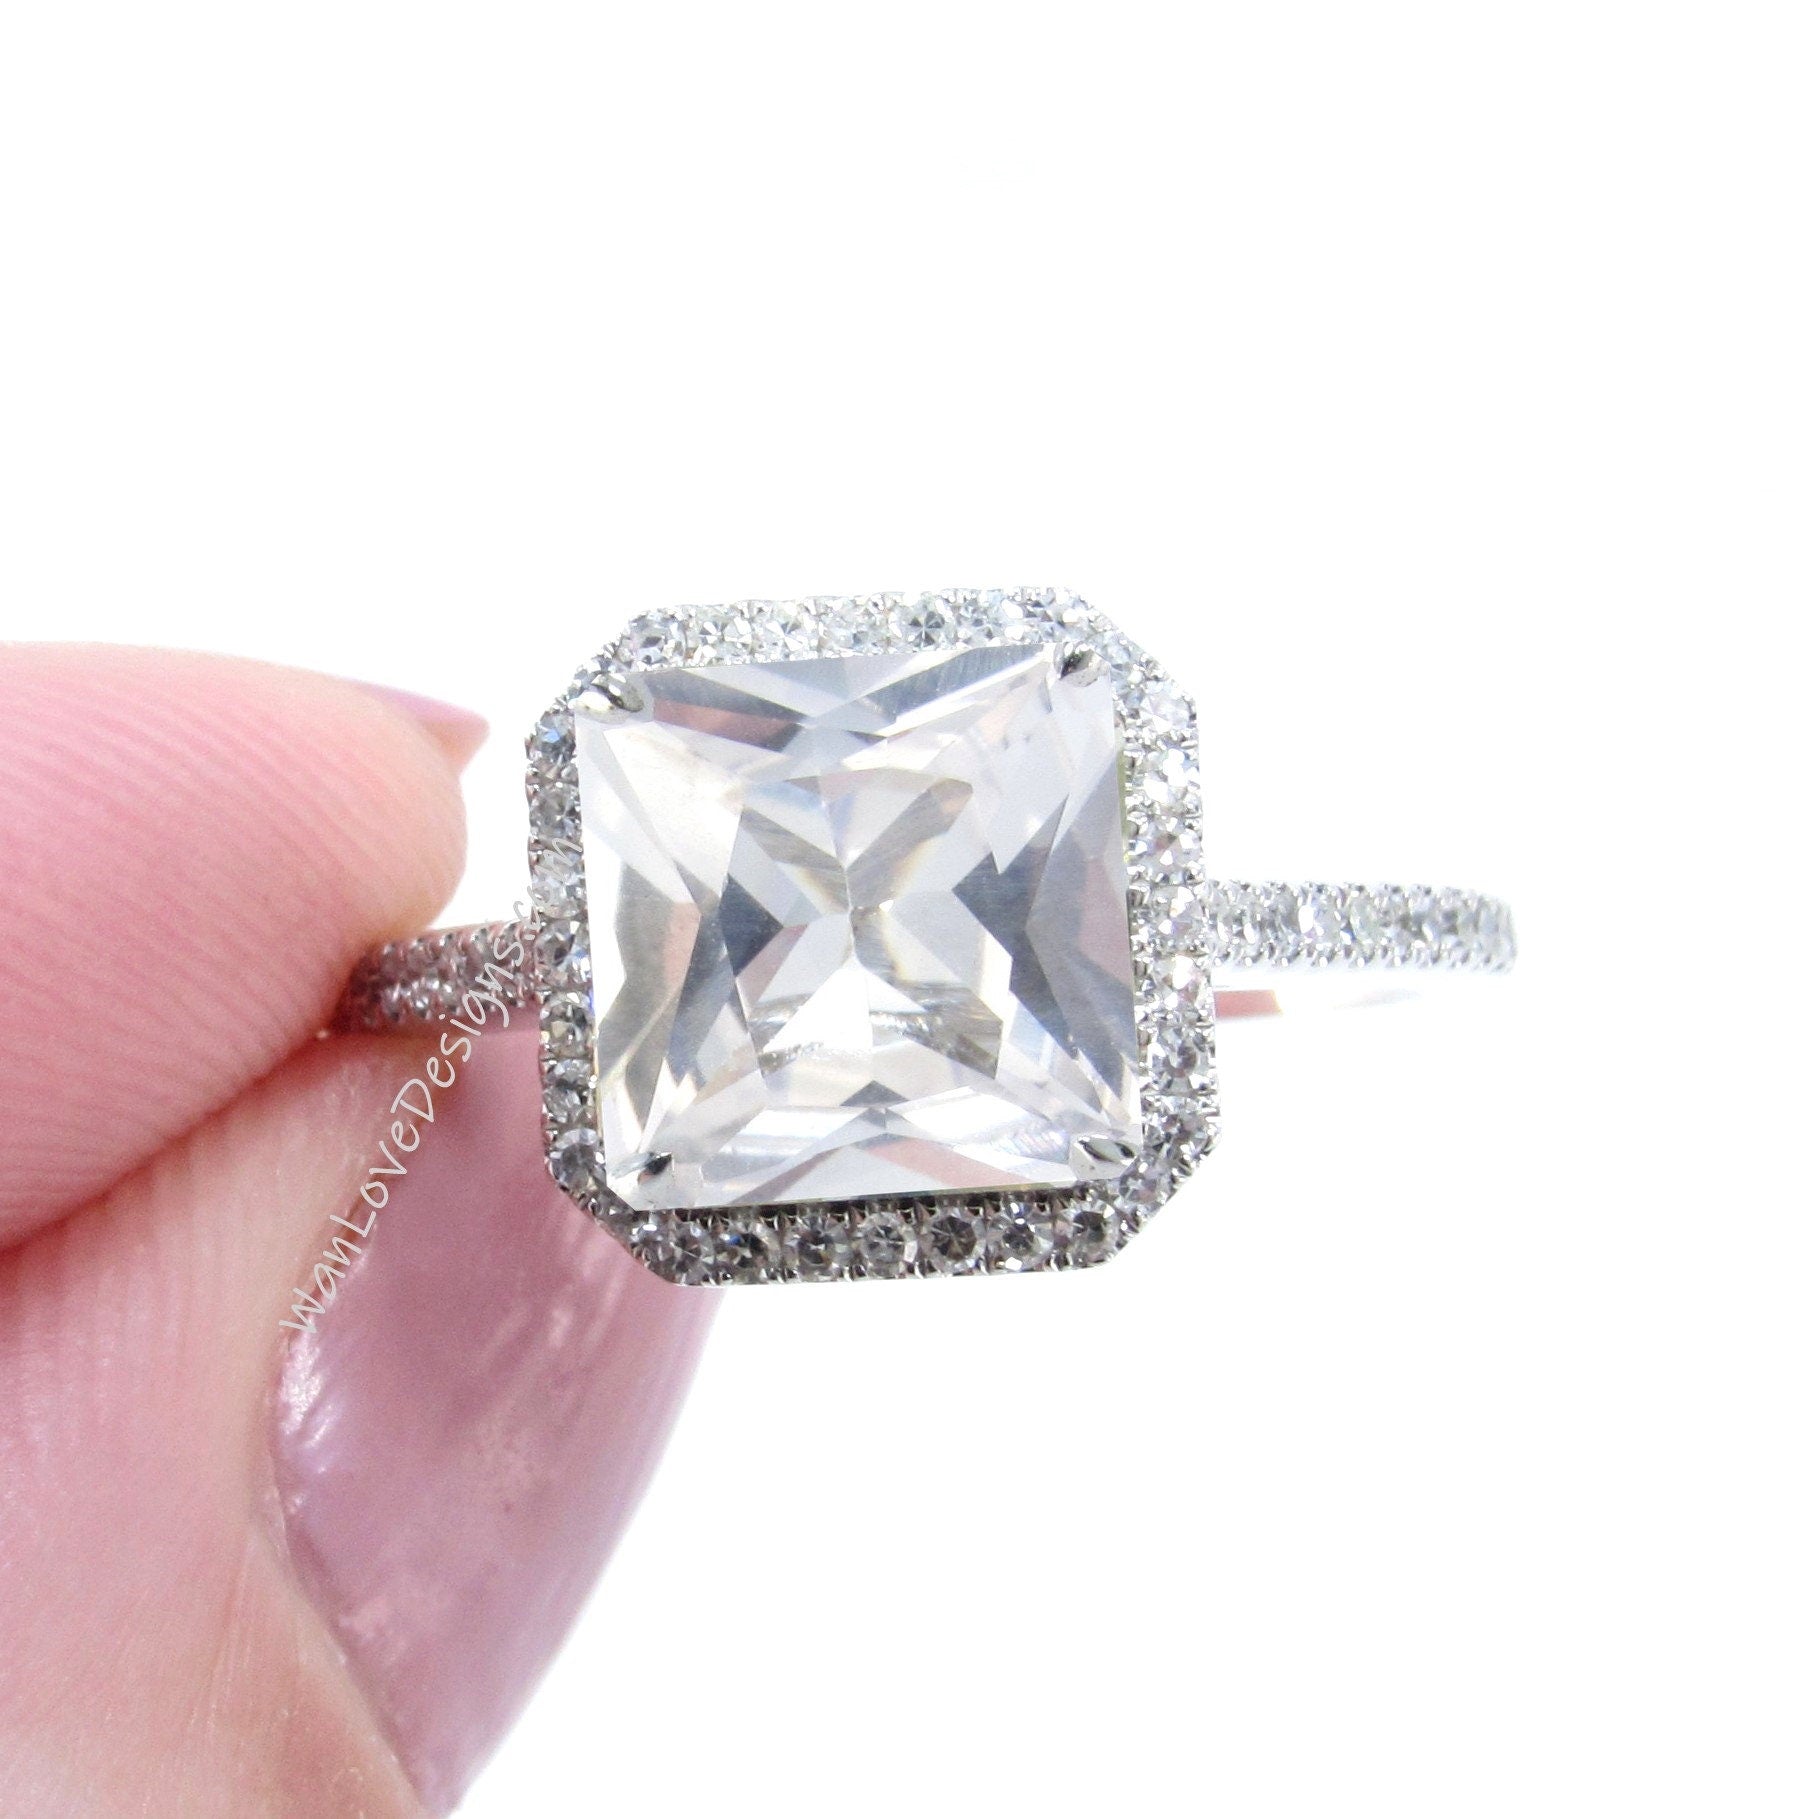 White Sapphire engagement ring asscher diamond halo ring 14k rose gold diamond halo princess half eternity unique ring Promise Bridal ring